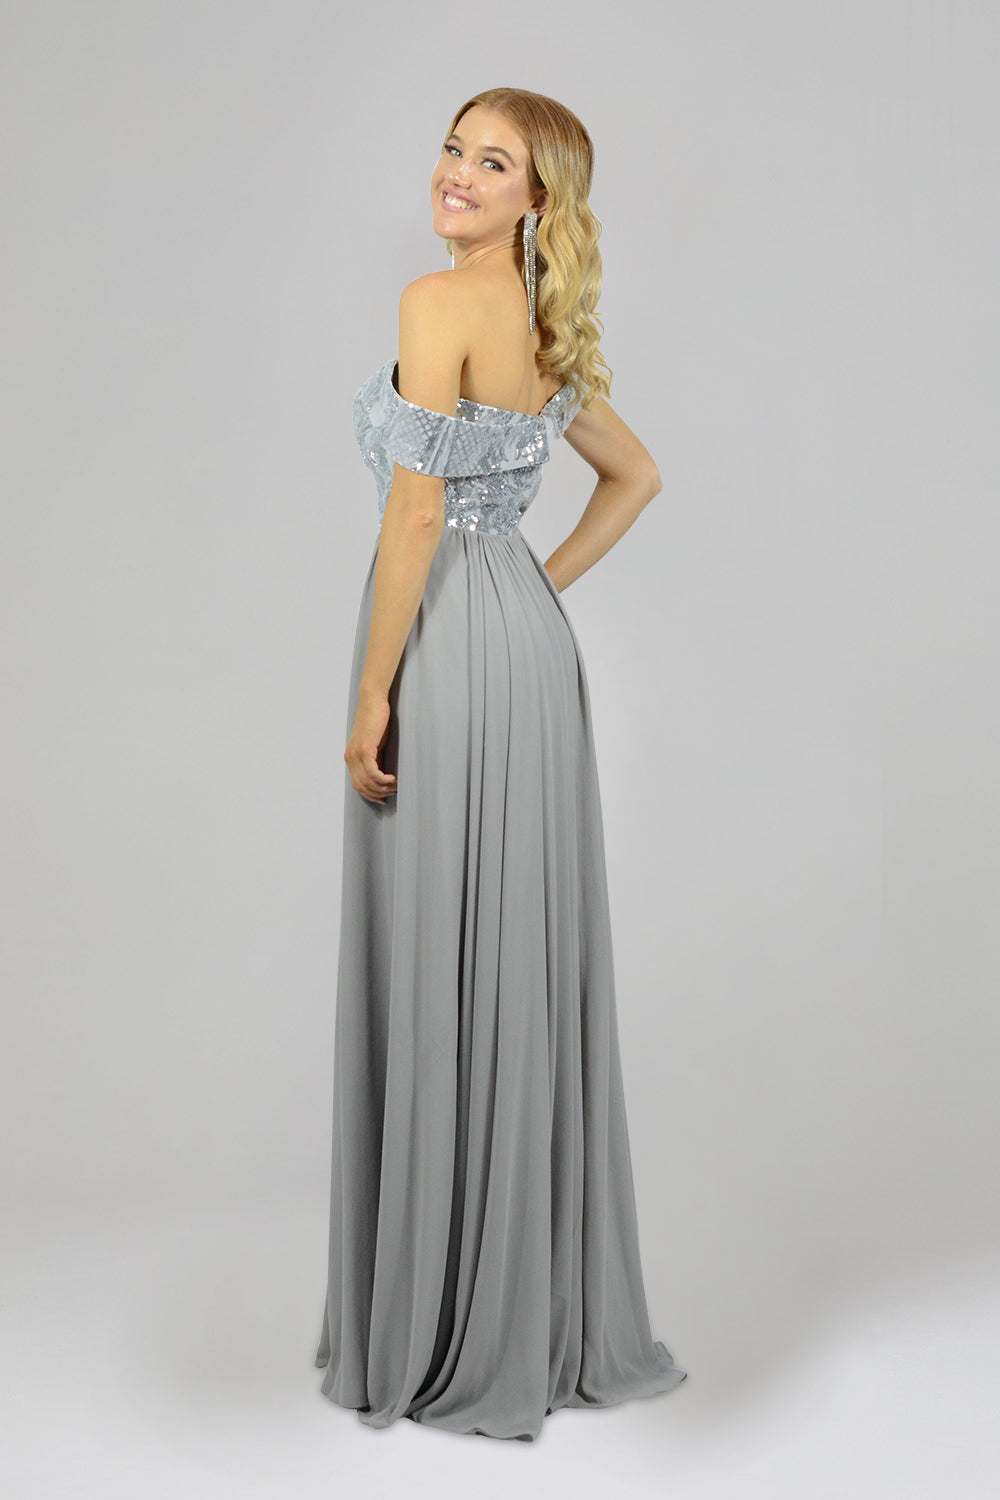 custom made grey chiffon bridesmaid dresses perth australian dressmaker envious bridal & formal